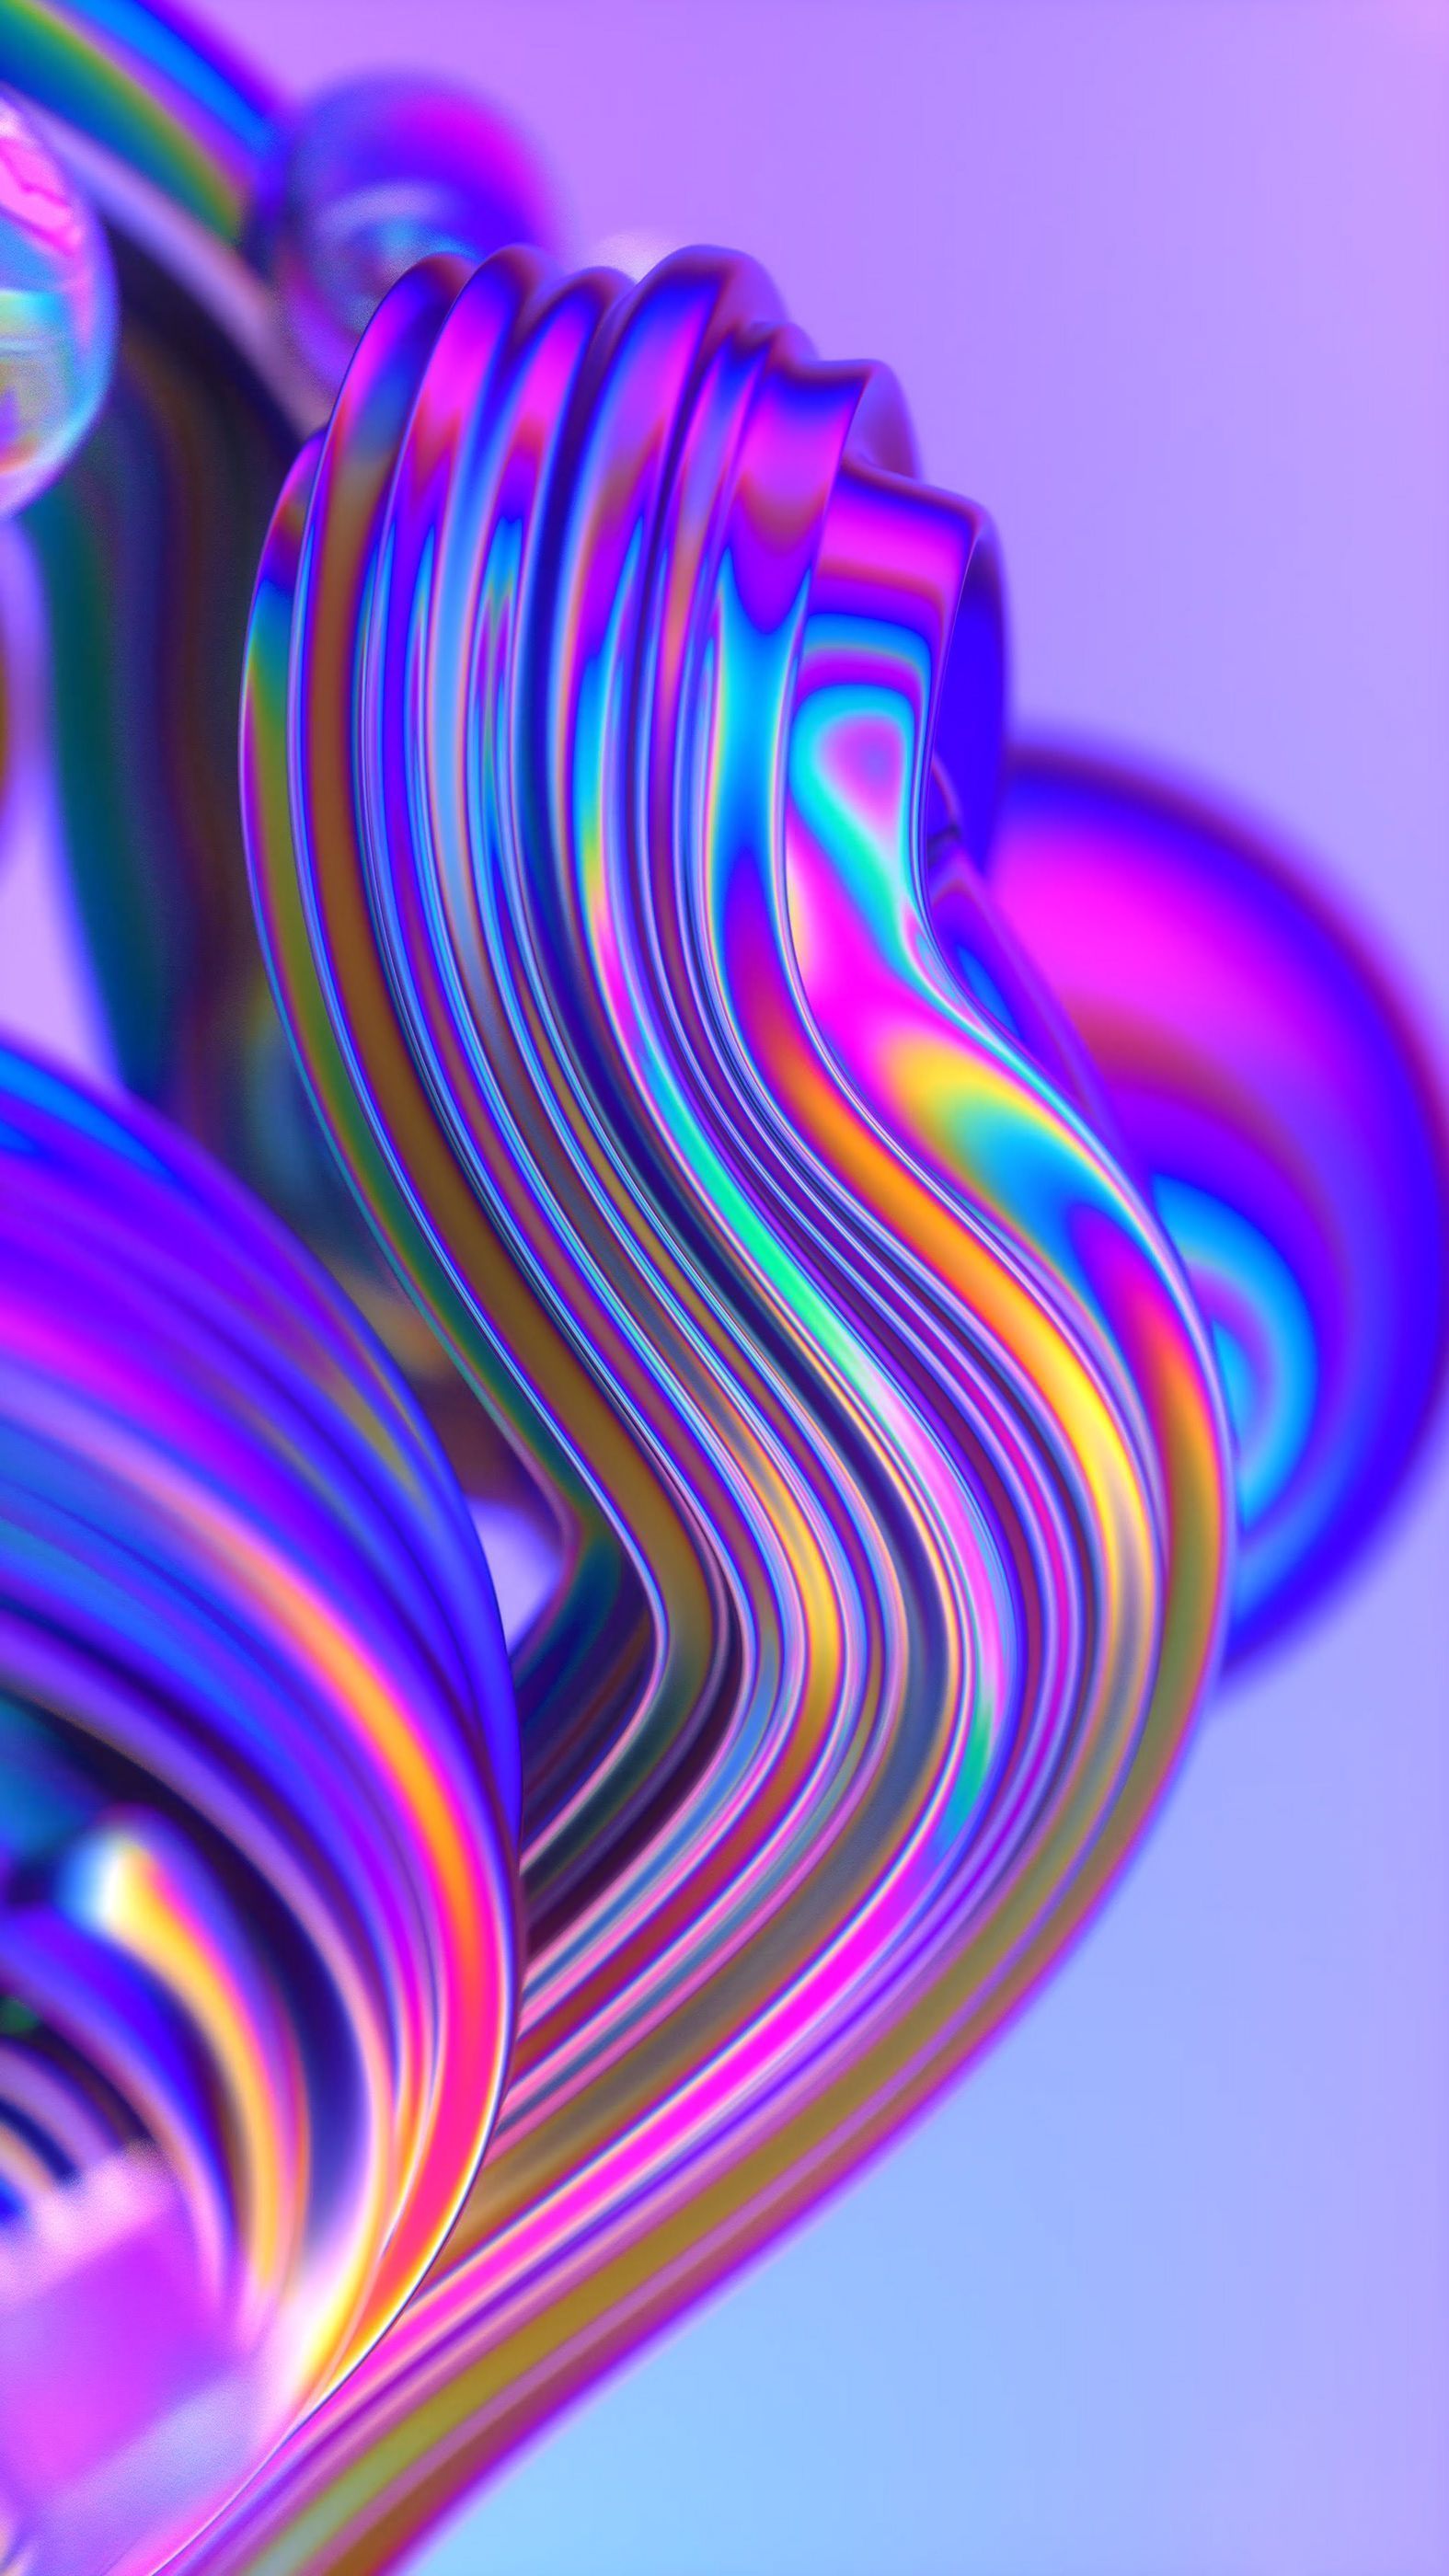 Aesthetic iridescent Background Wallpaper for Phone